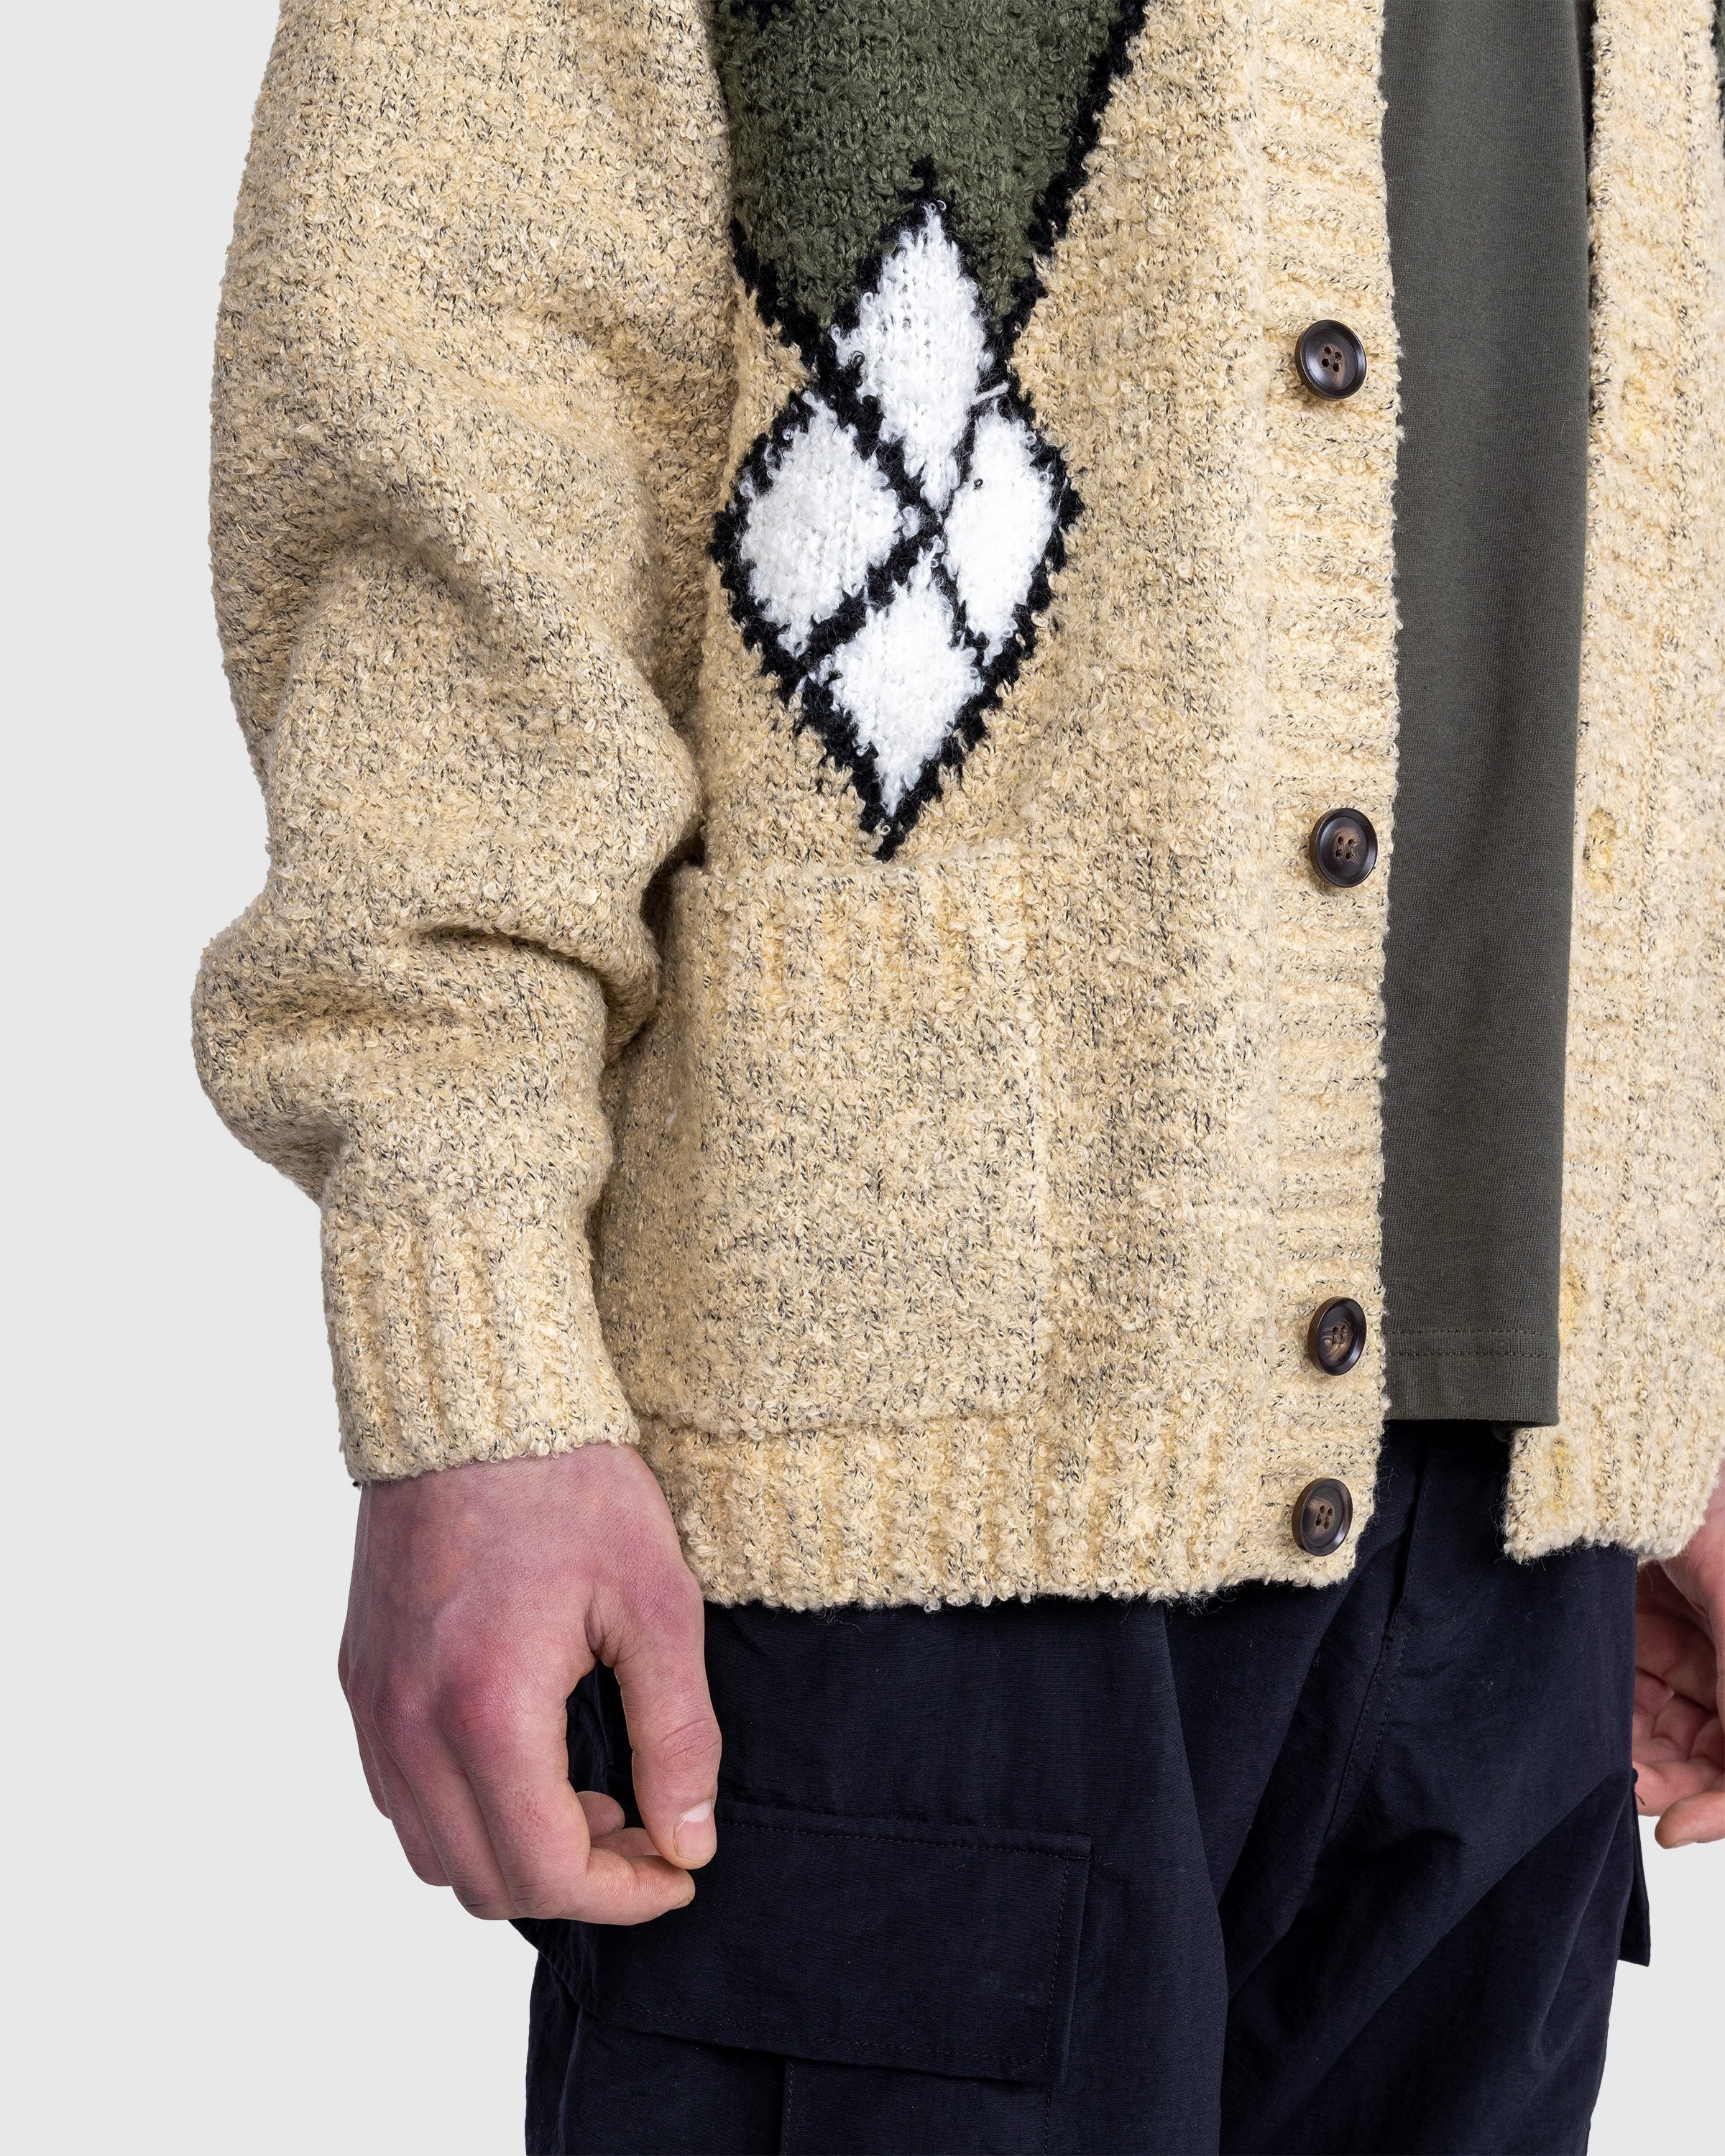 Patta – Argyle Knitted Cardigan | Highsnobiety Shop